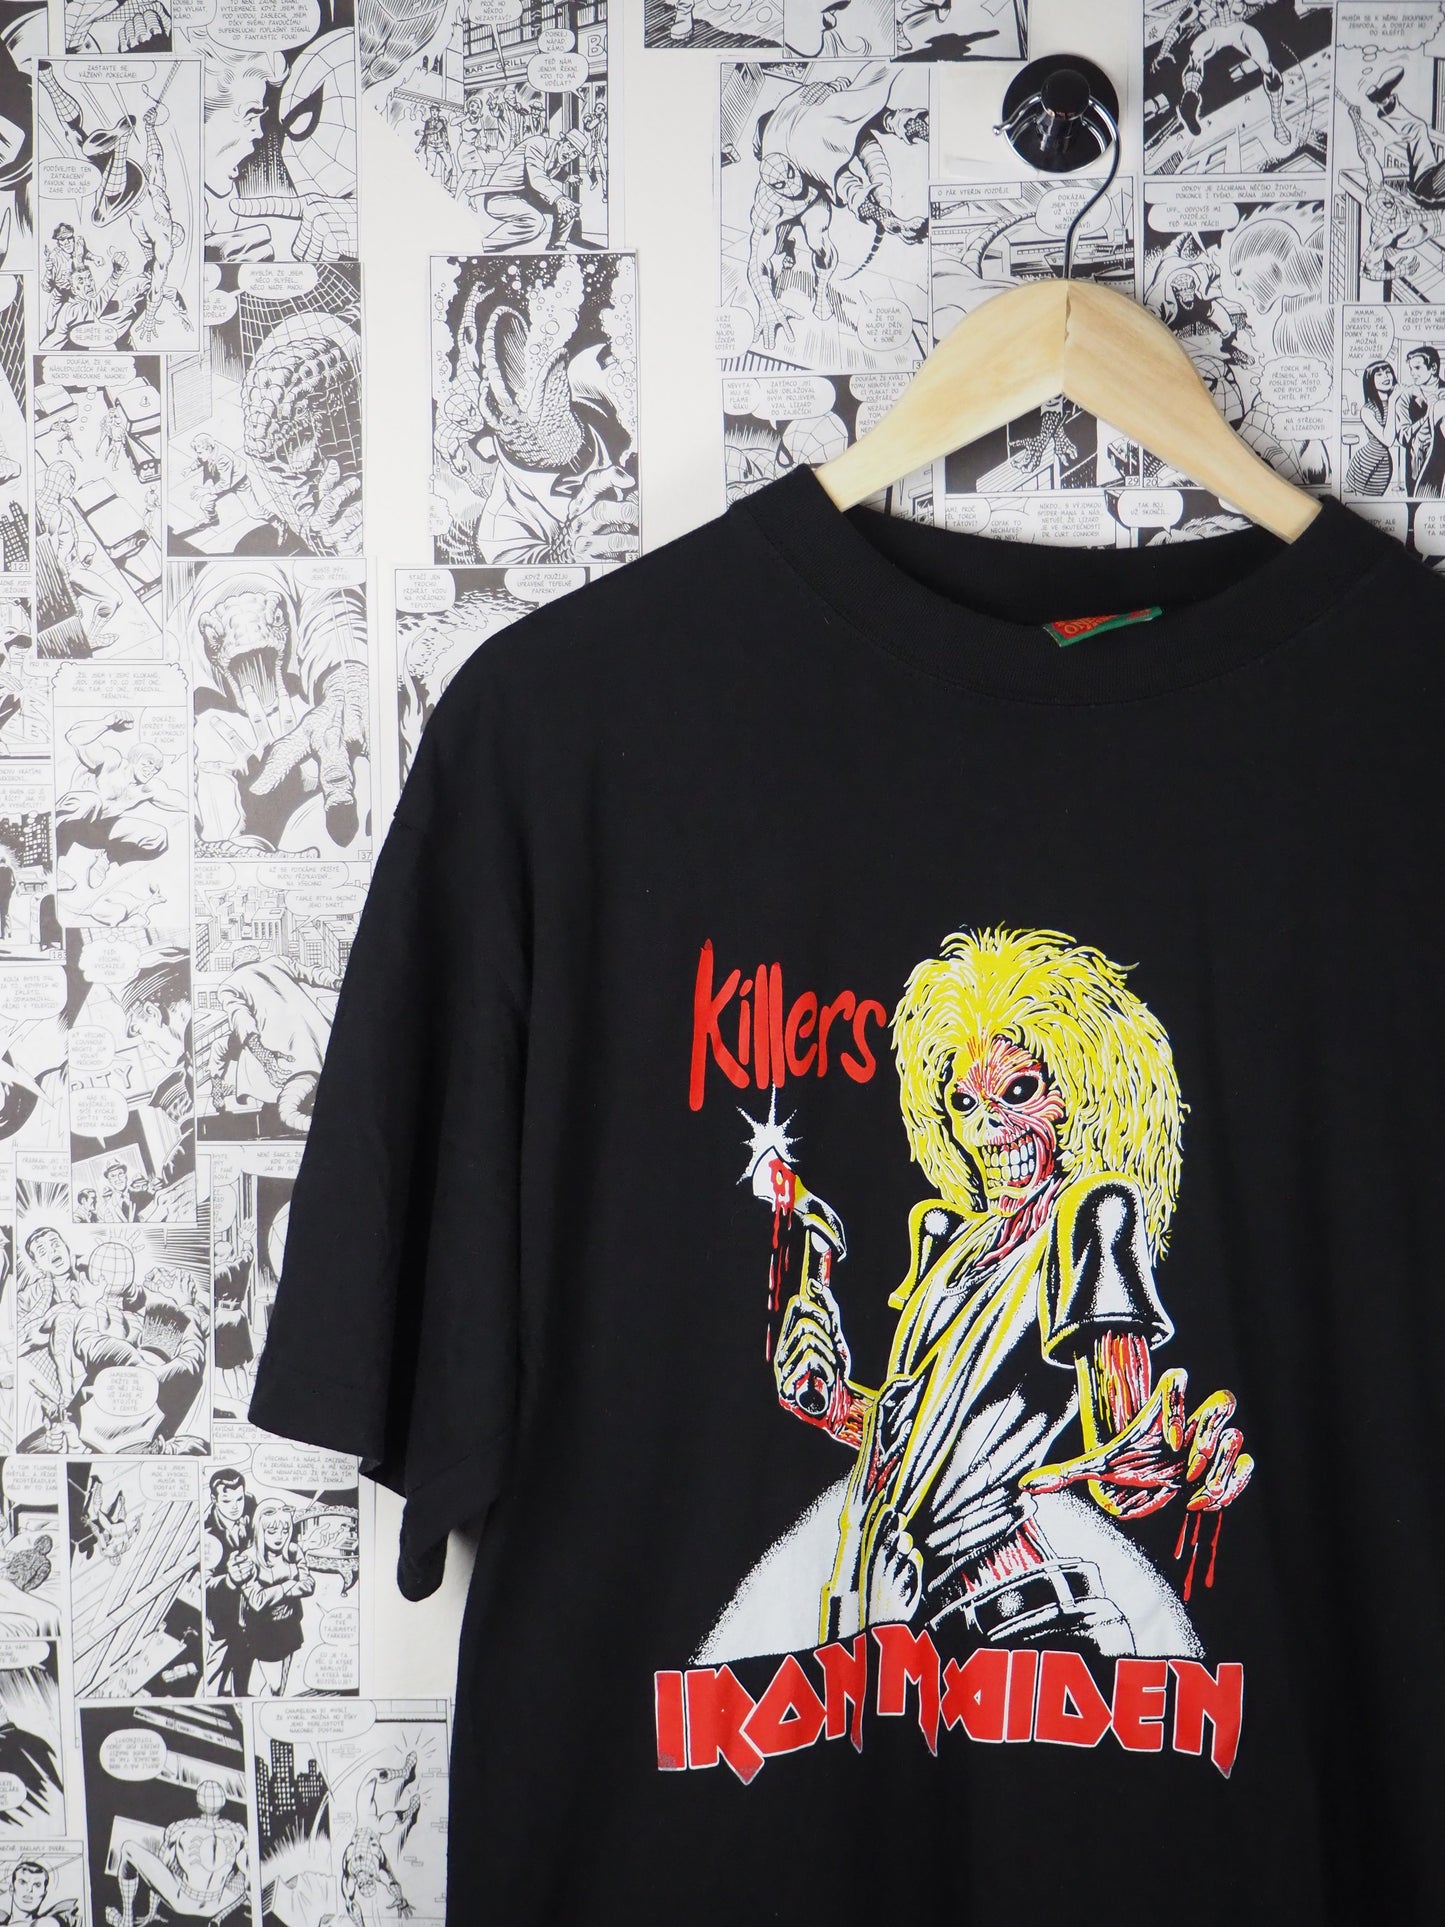 Vintage Iron Maiden "Killers" 90s t-shirt - size XL